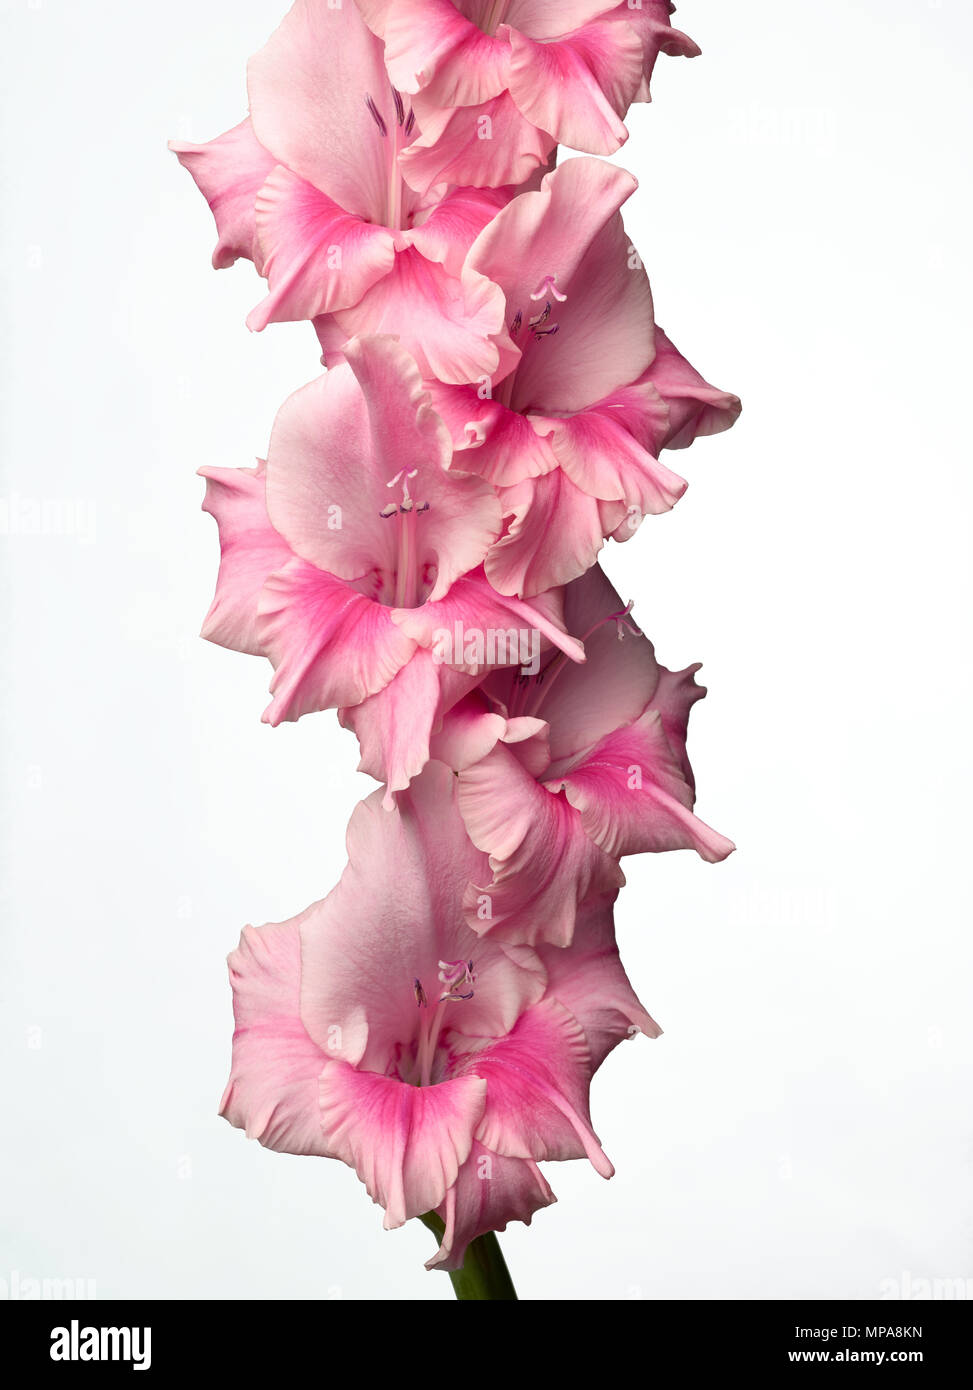 Stem of pink Gladioi flowers in full bloom. Stock Photo